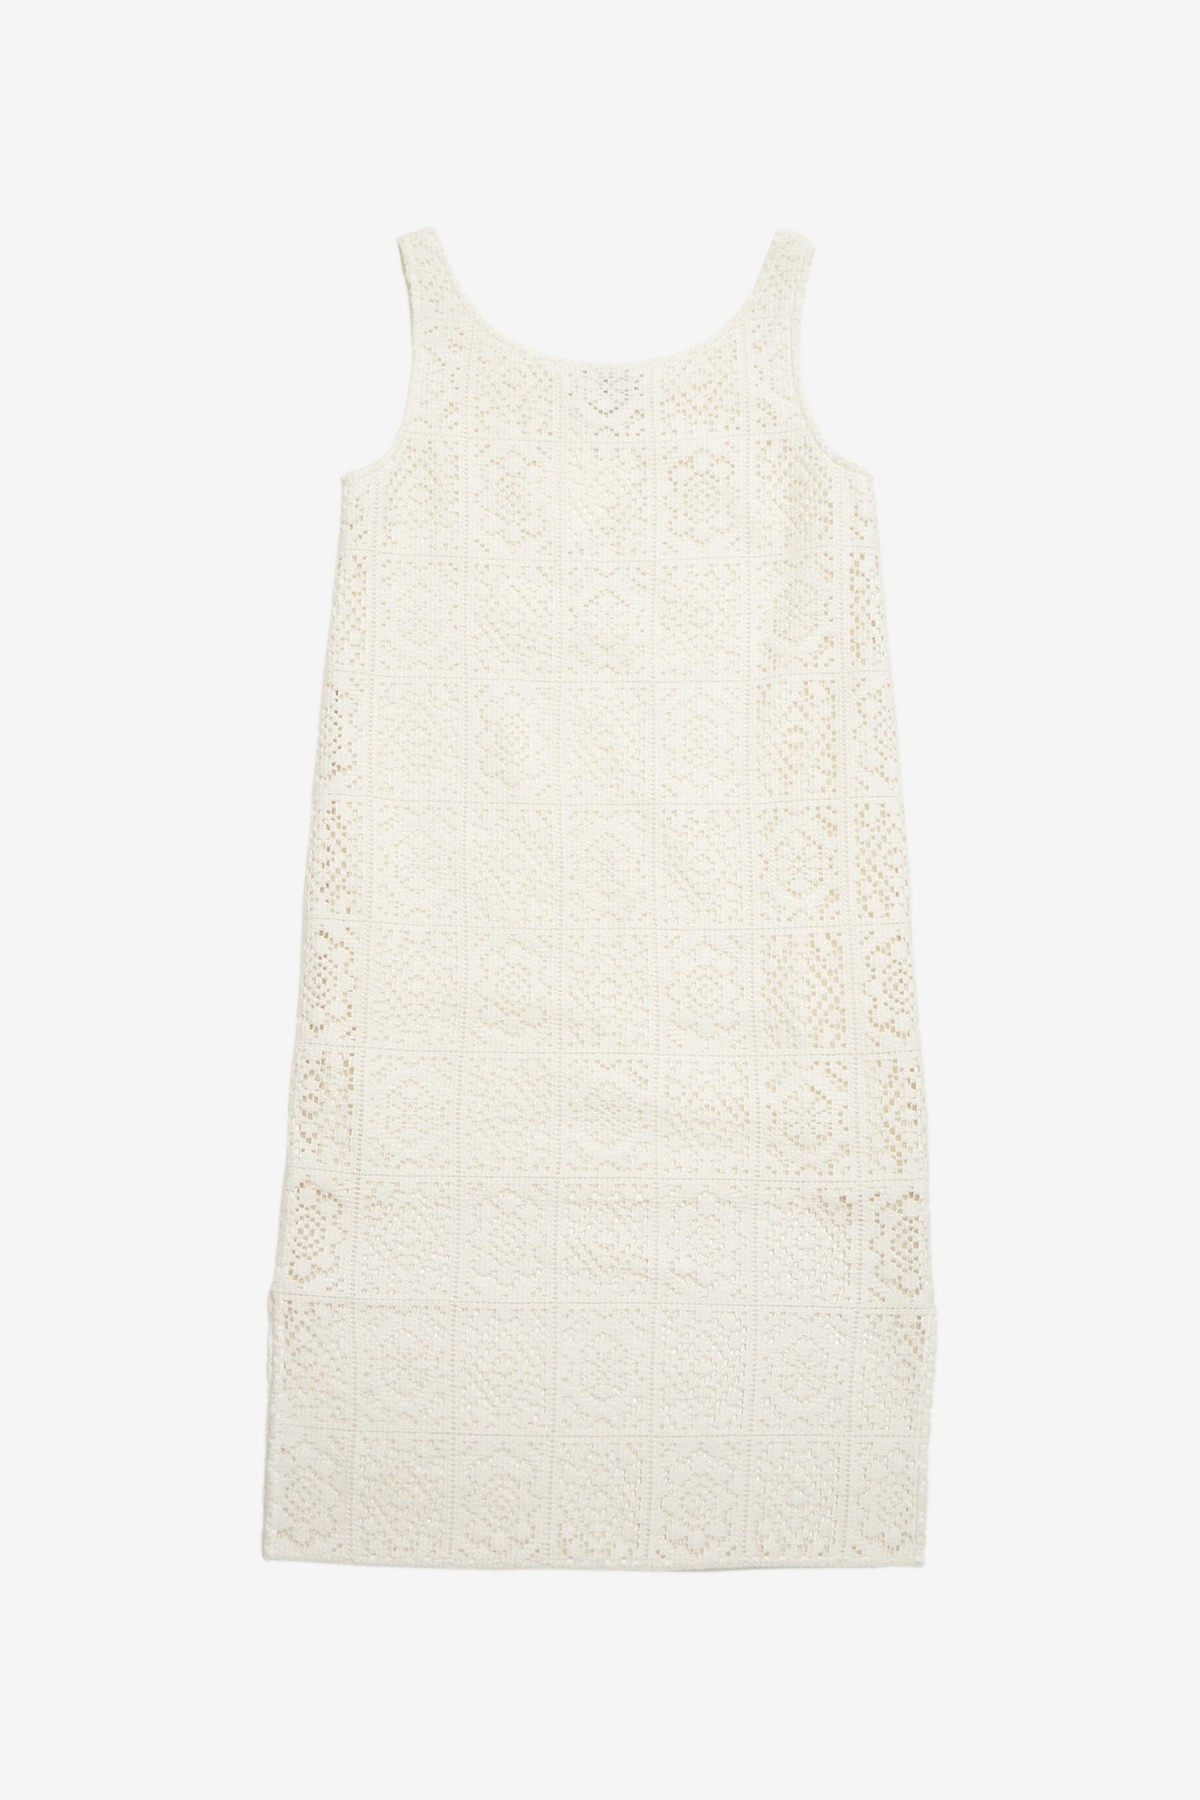 Amomento Crochet Dress in Ivory